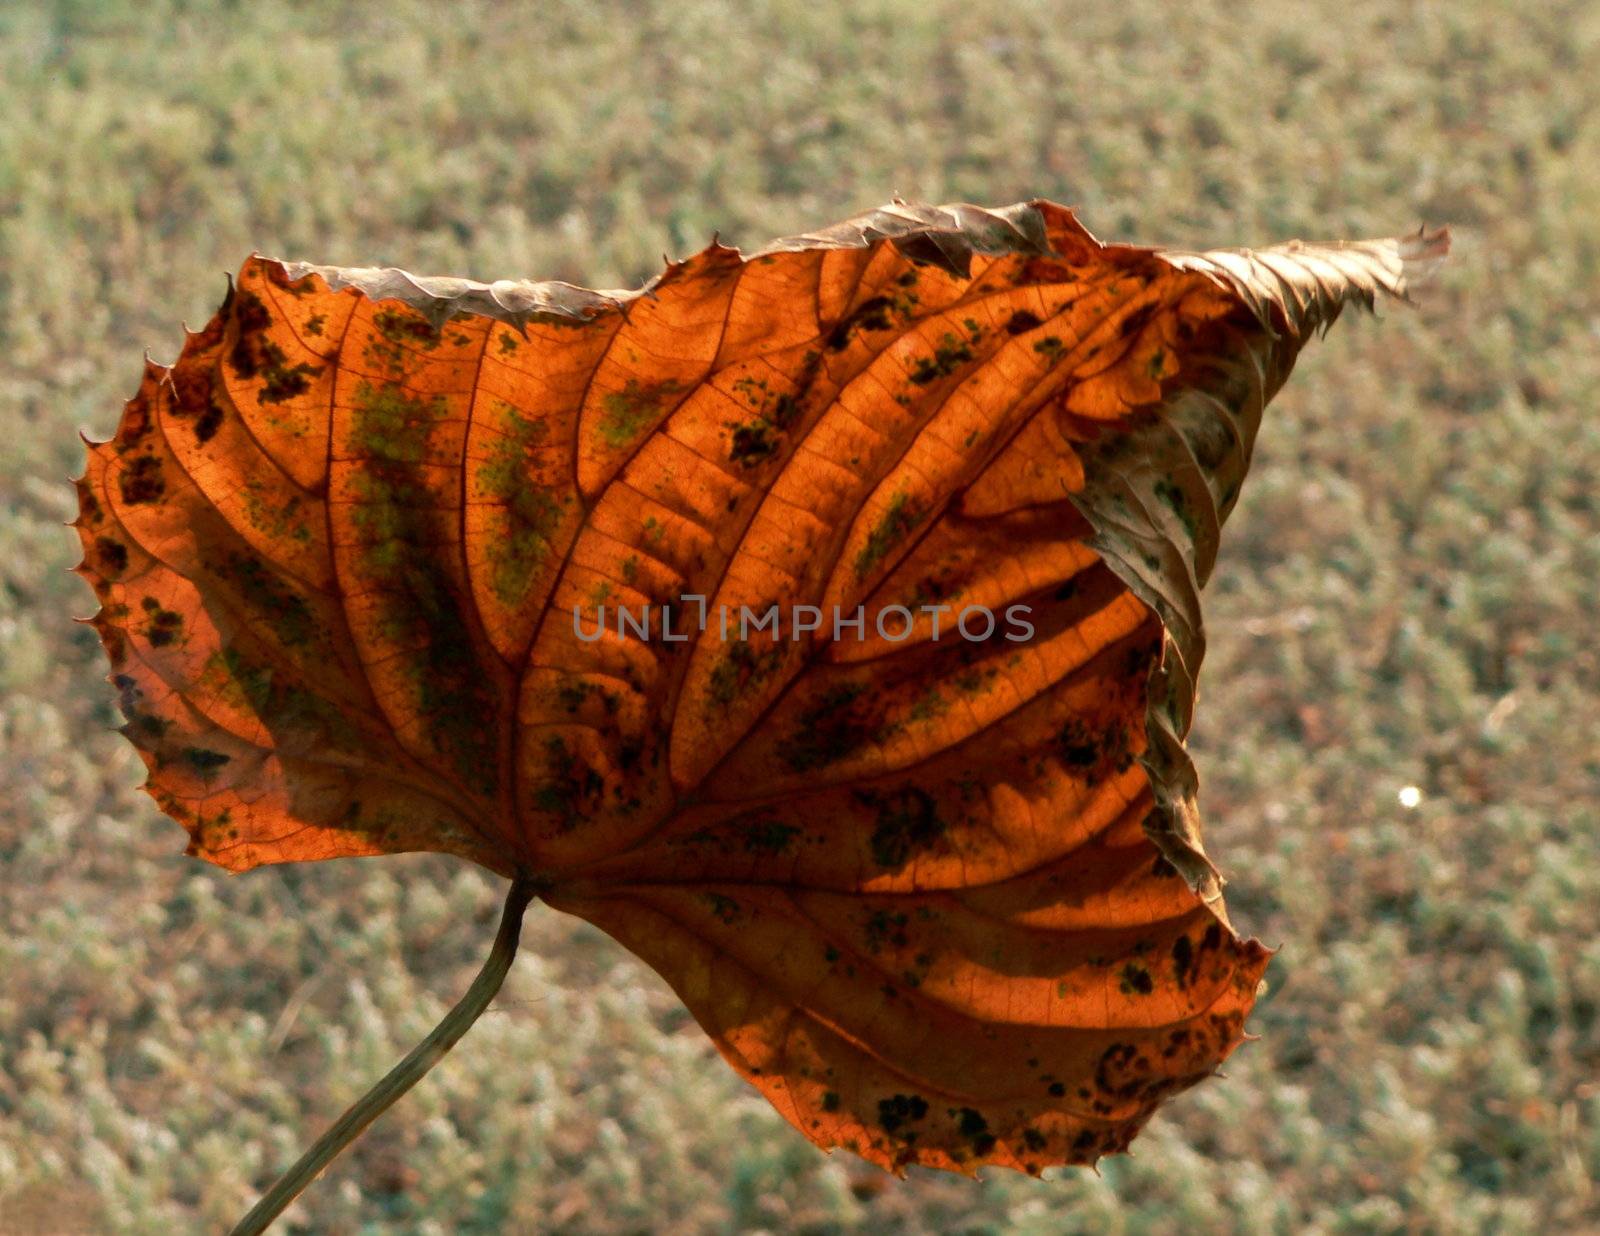 An autumn leaf in the rays of an evening sun.